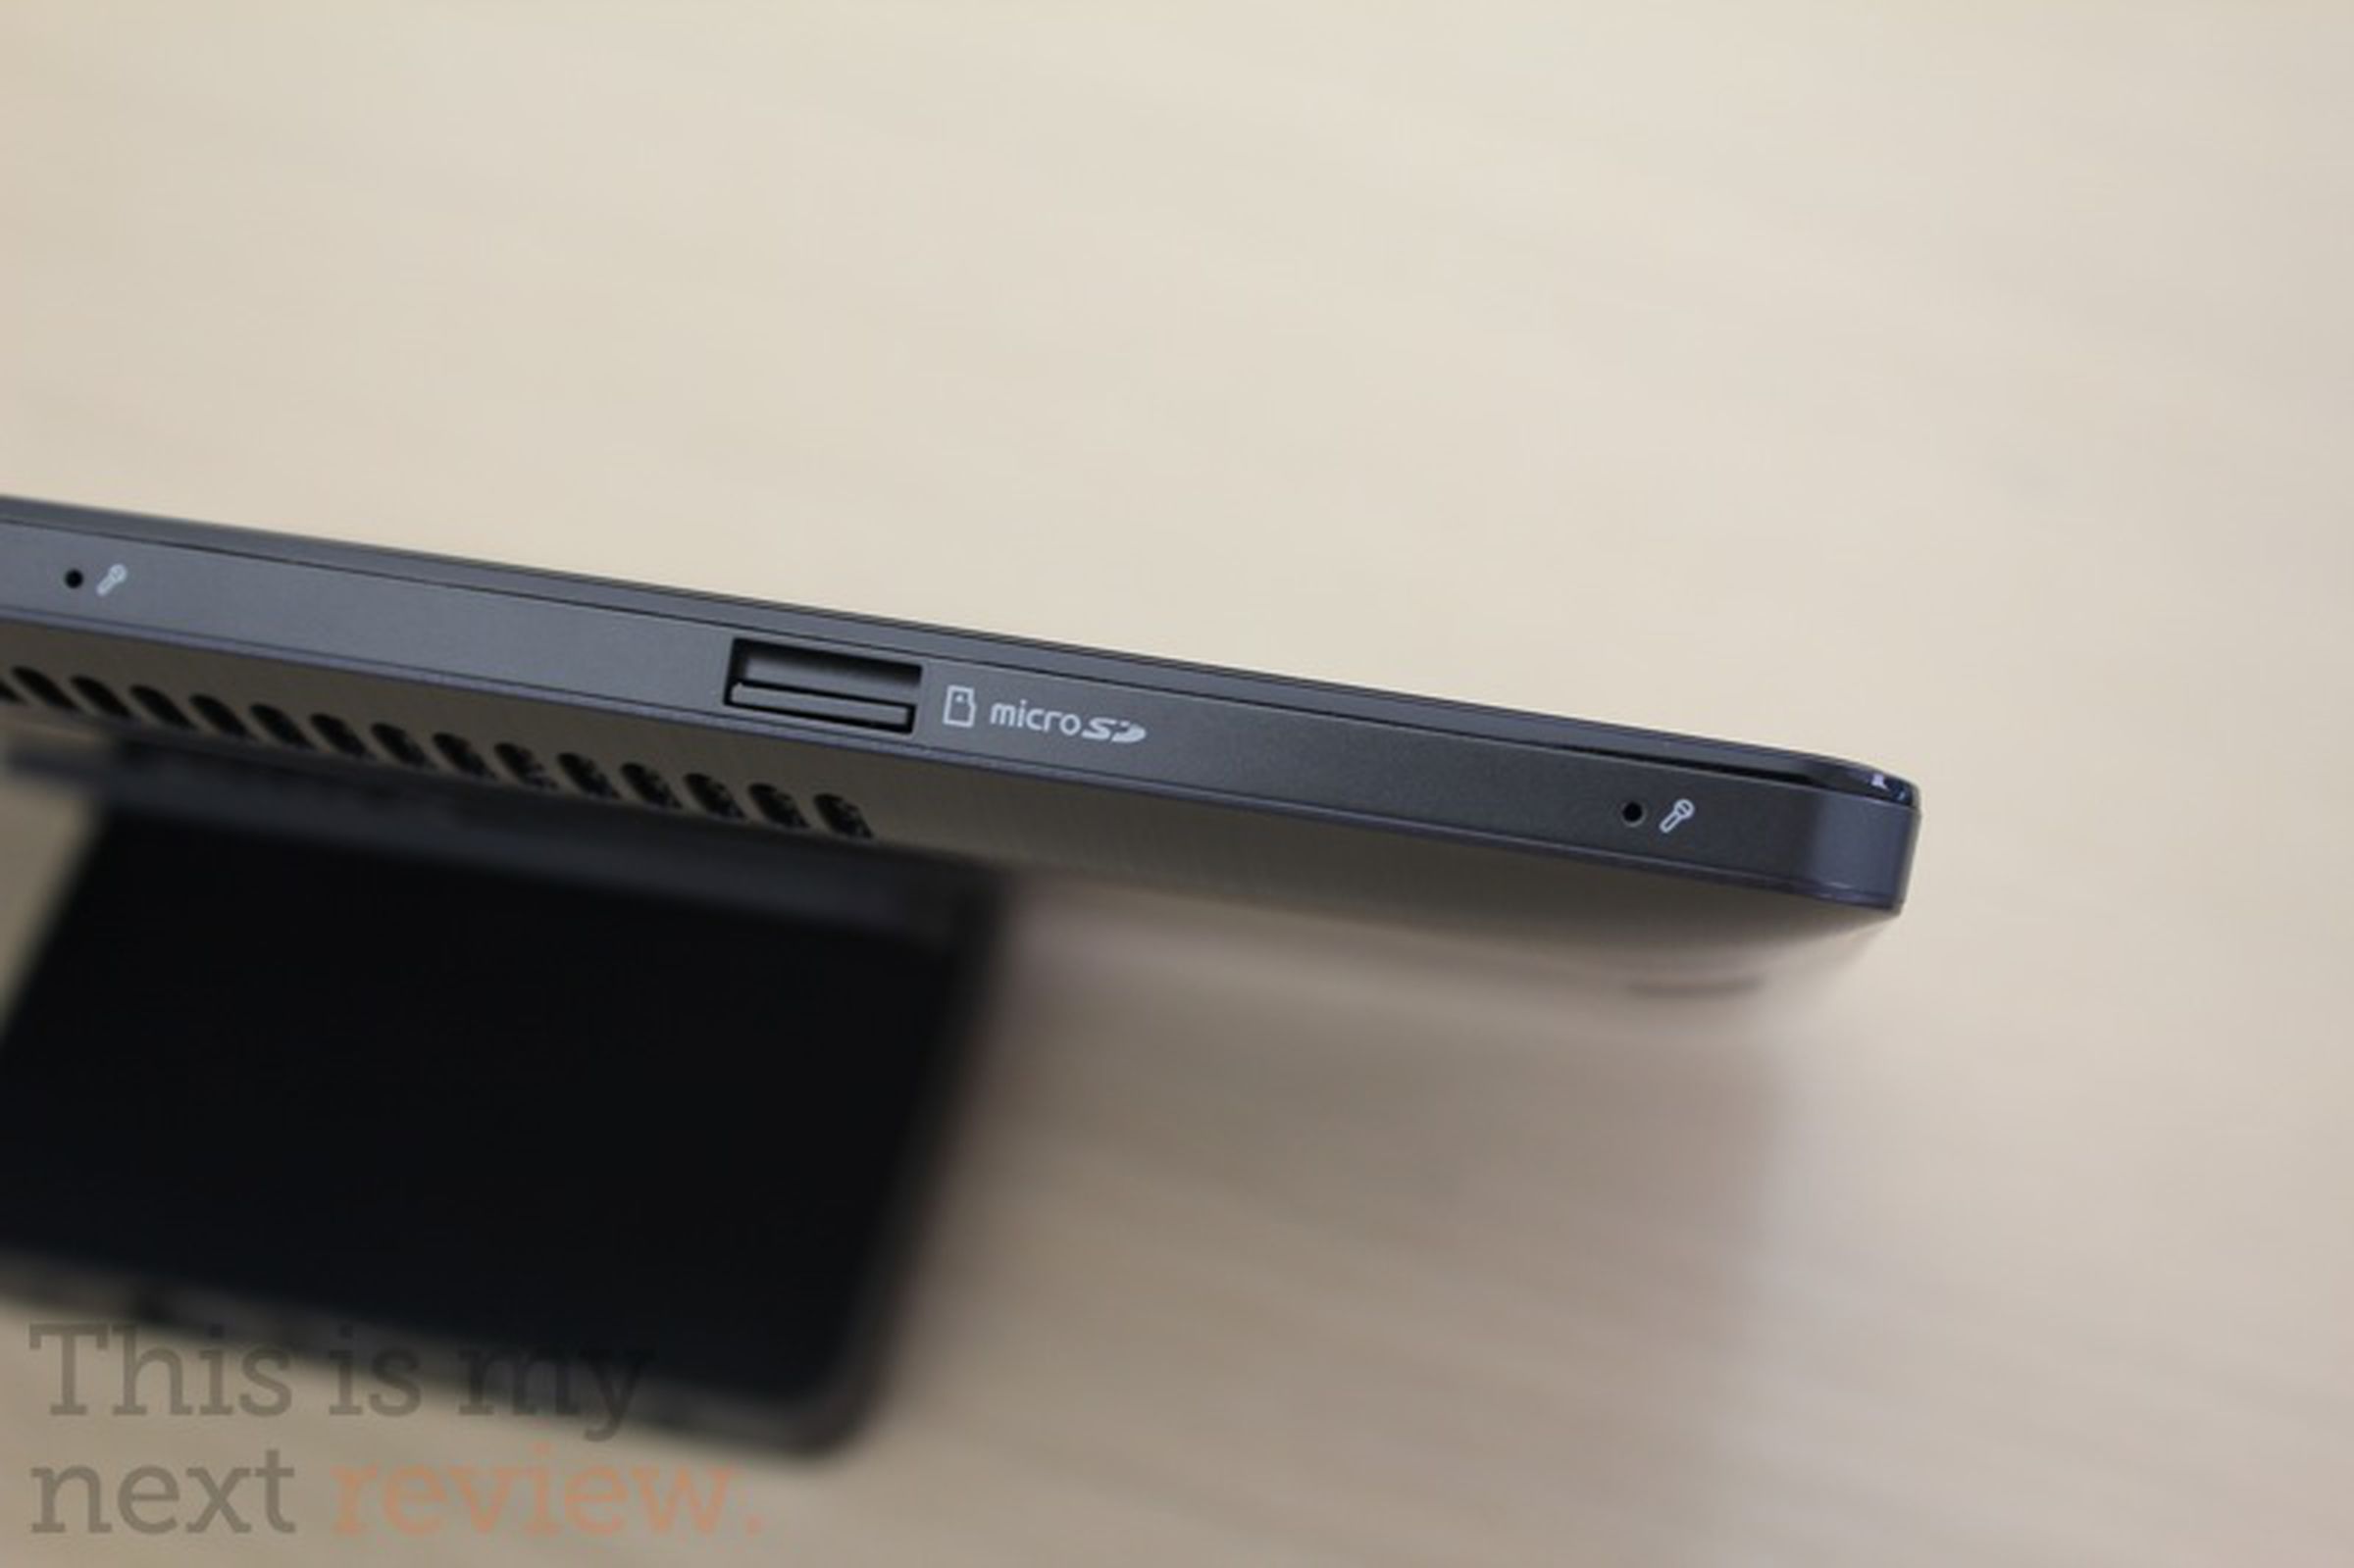 Samsung Series 7 Slate PC hands-on